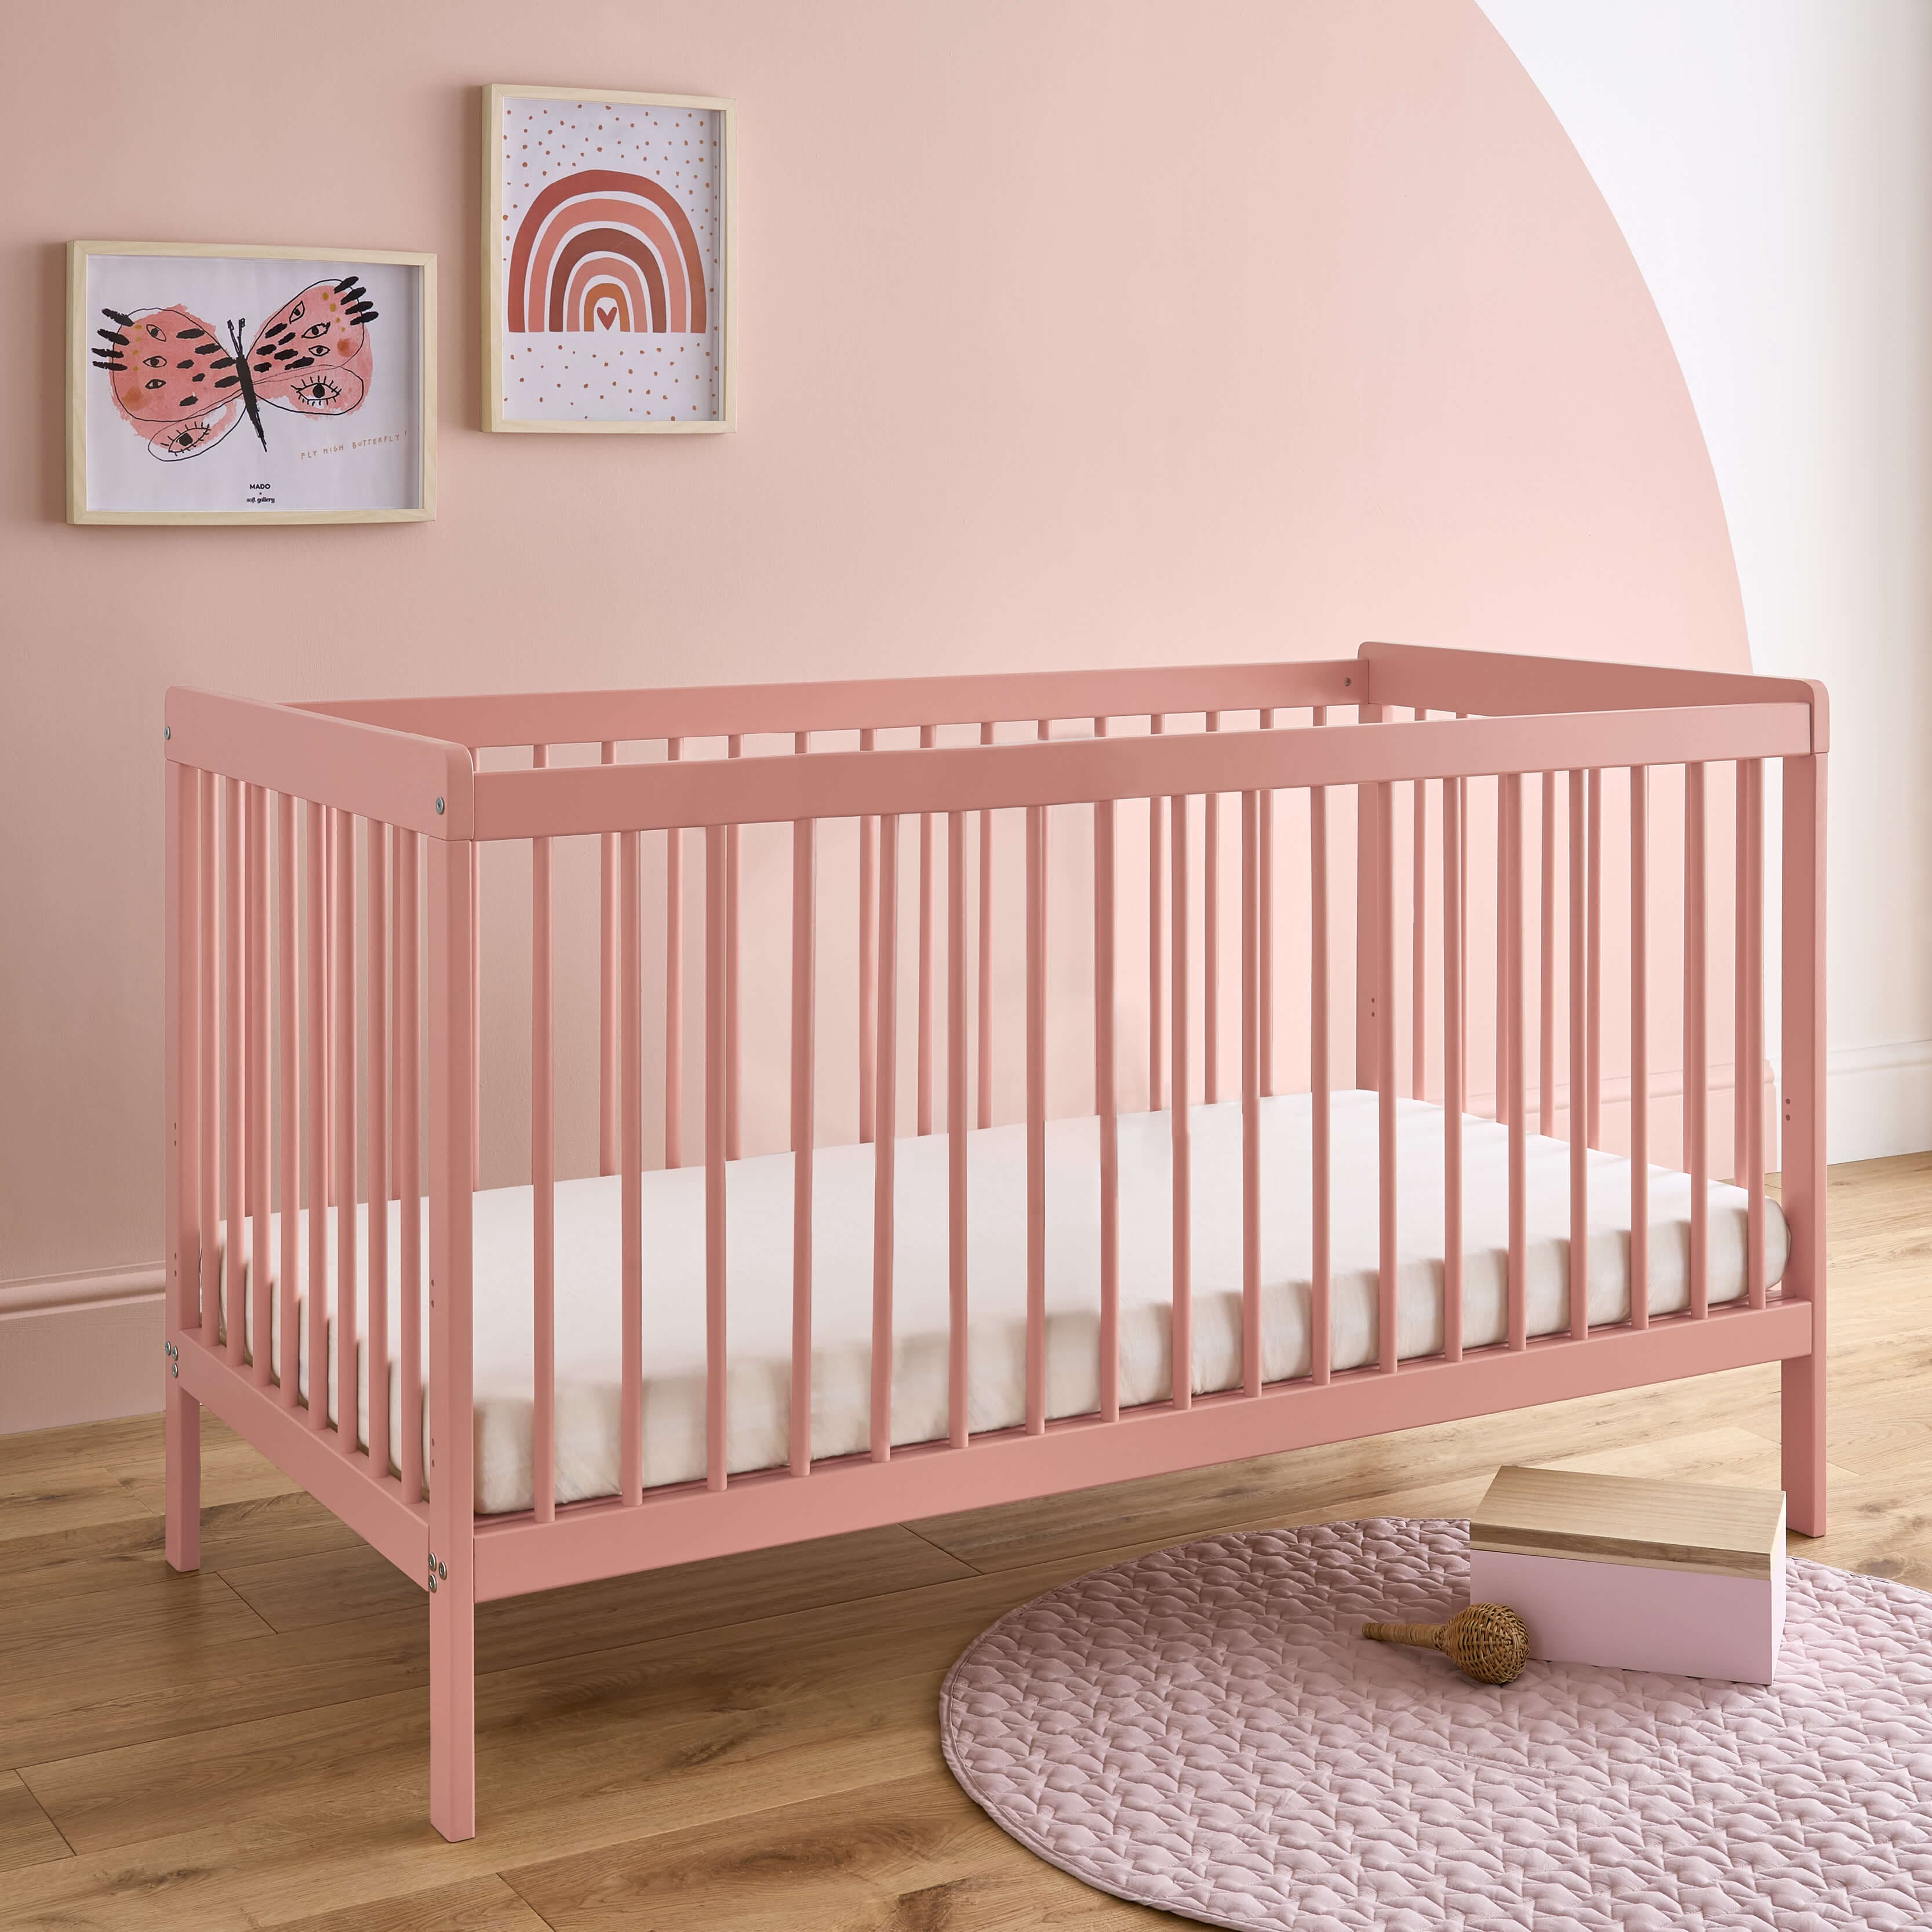 CuddleCo Nola 3 Piece Room Set in Soft Blush Nursery Room Sets